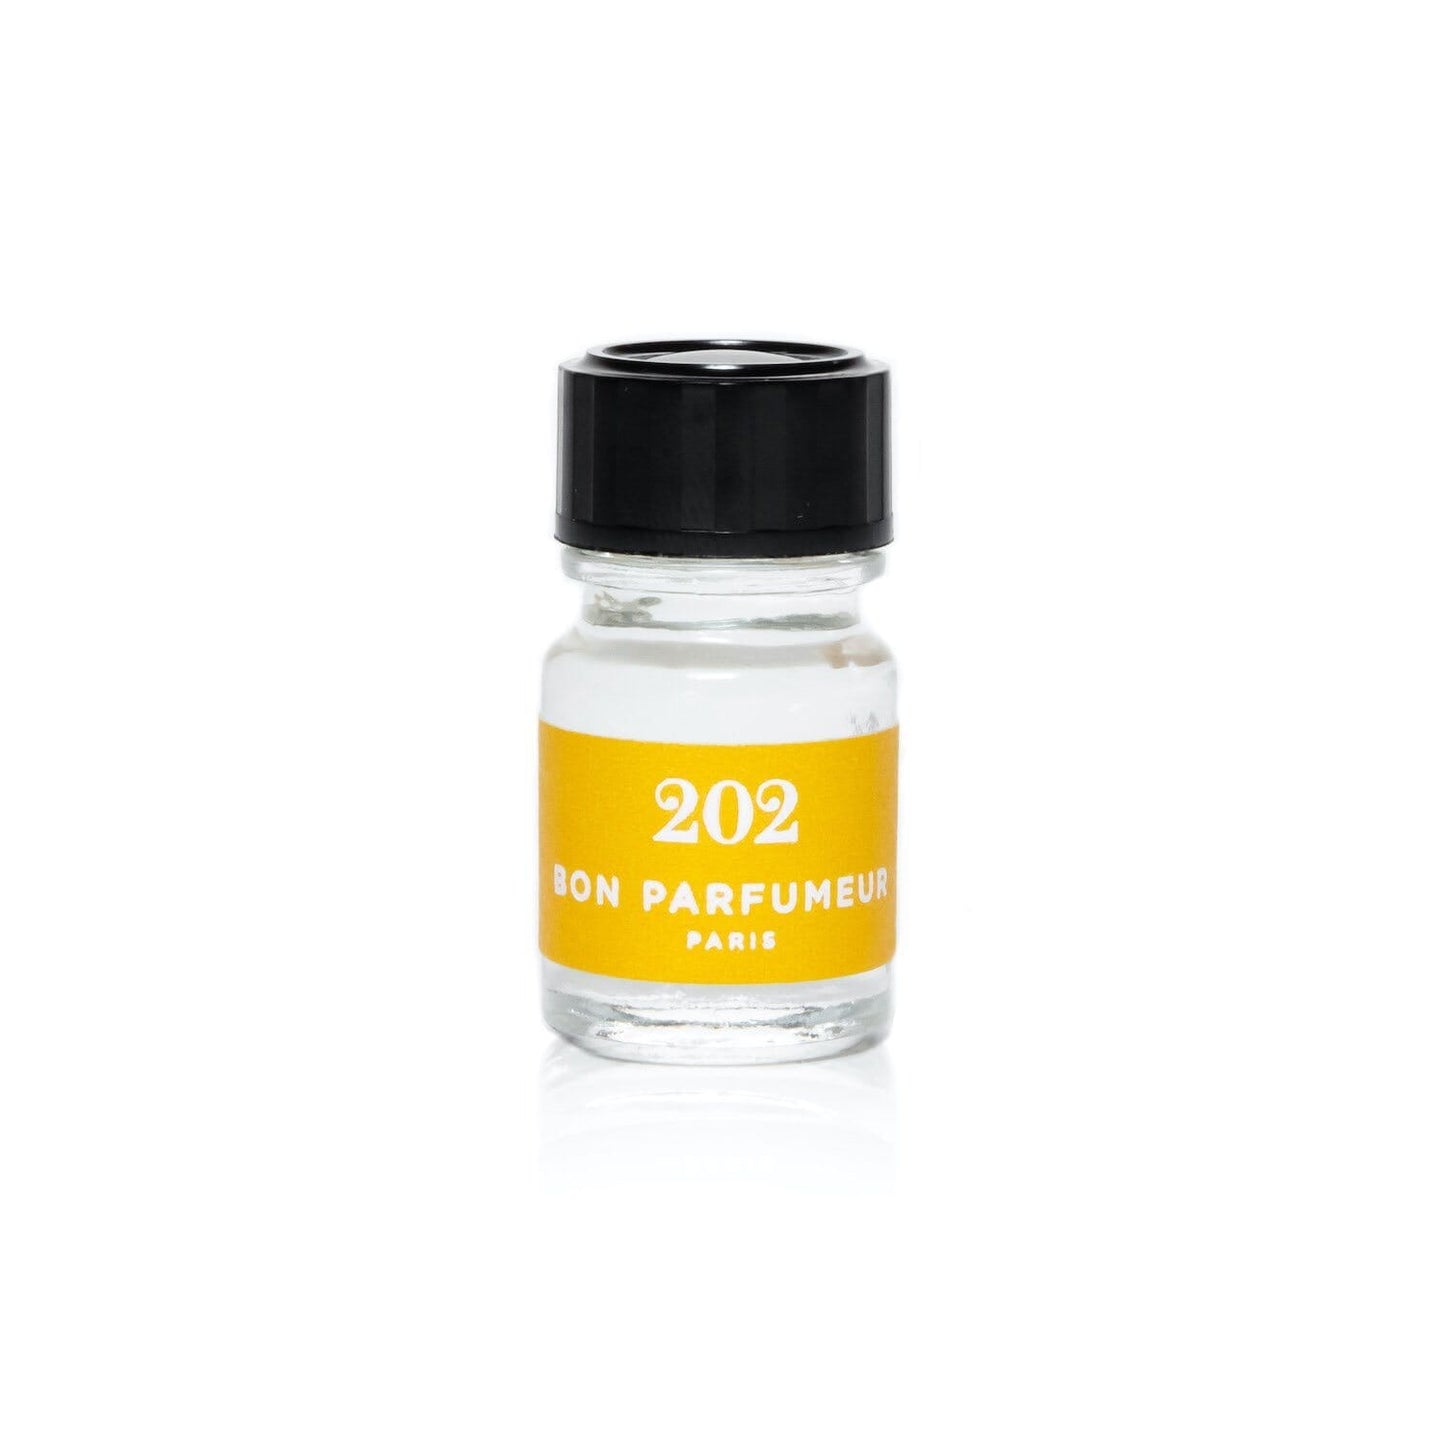 SZ - Sample 1 Bon Parfumeur France 202 